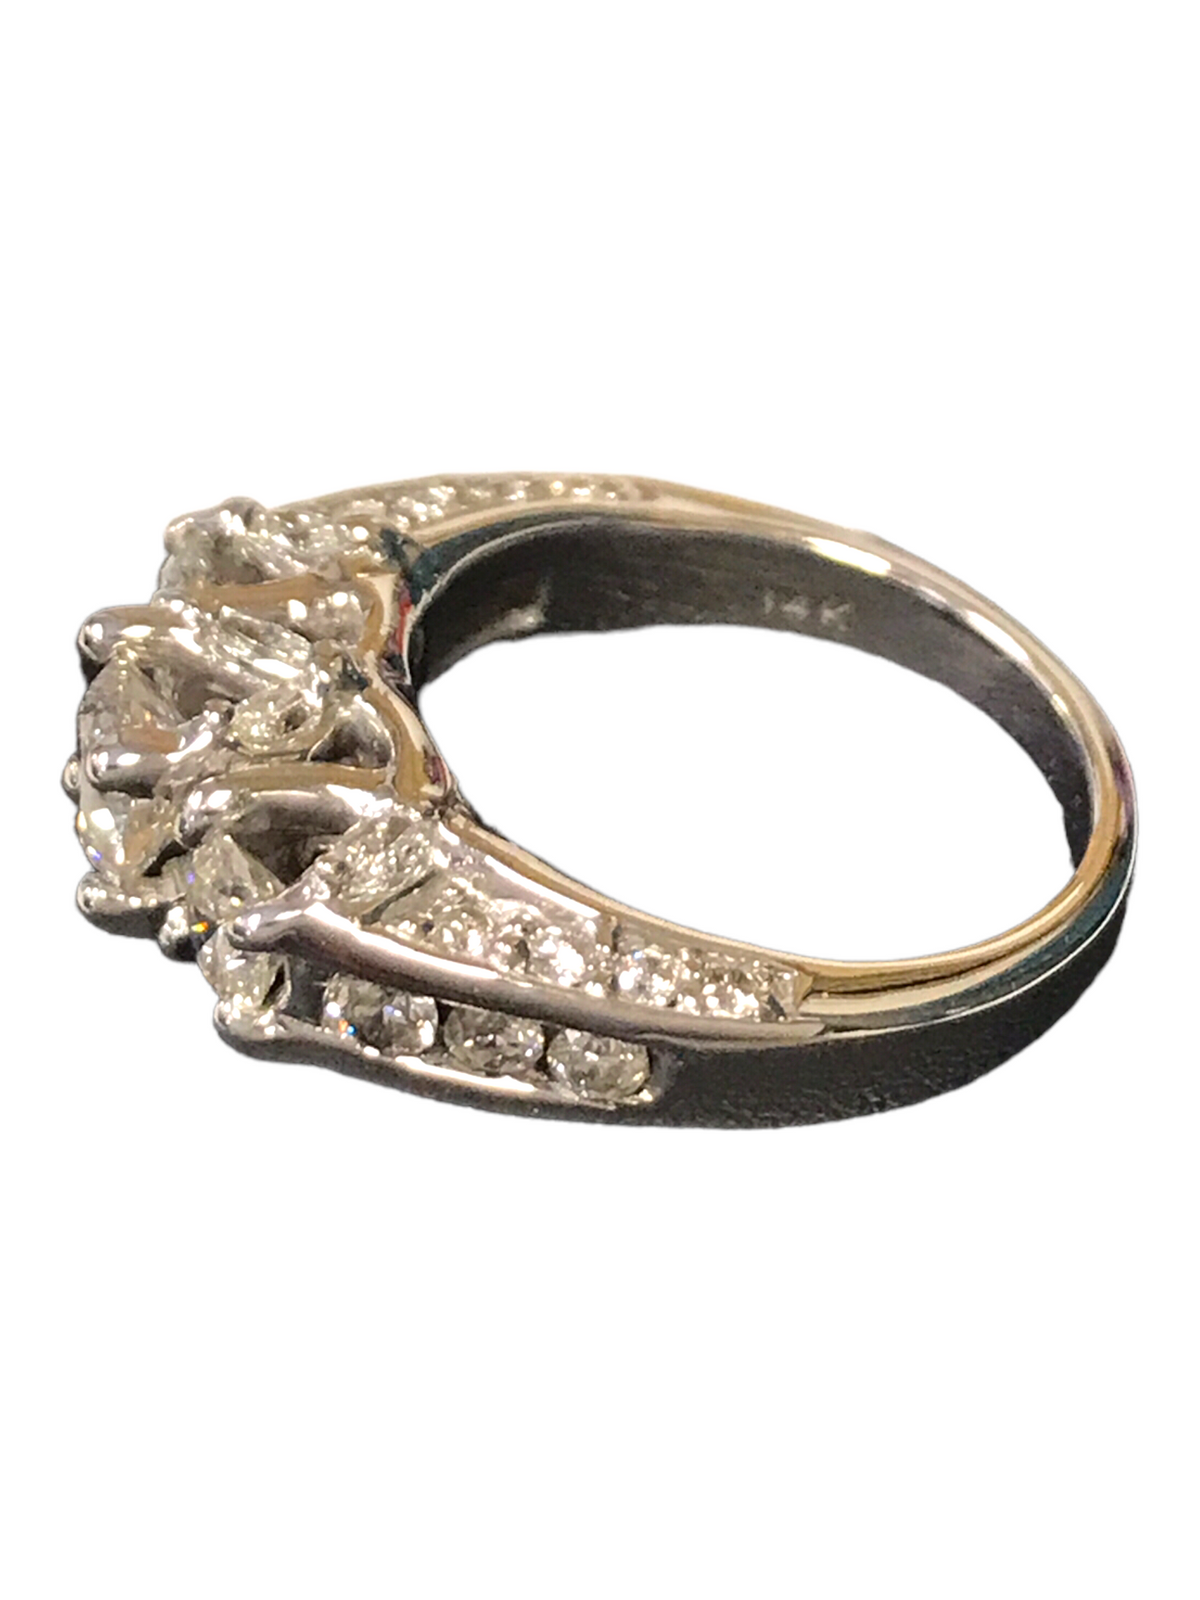 14K White Gold Diamond Ladies Engagement Ring Size 5